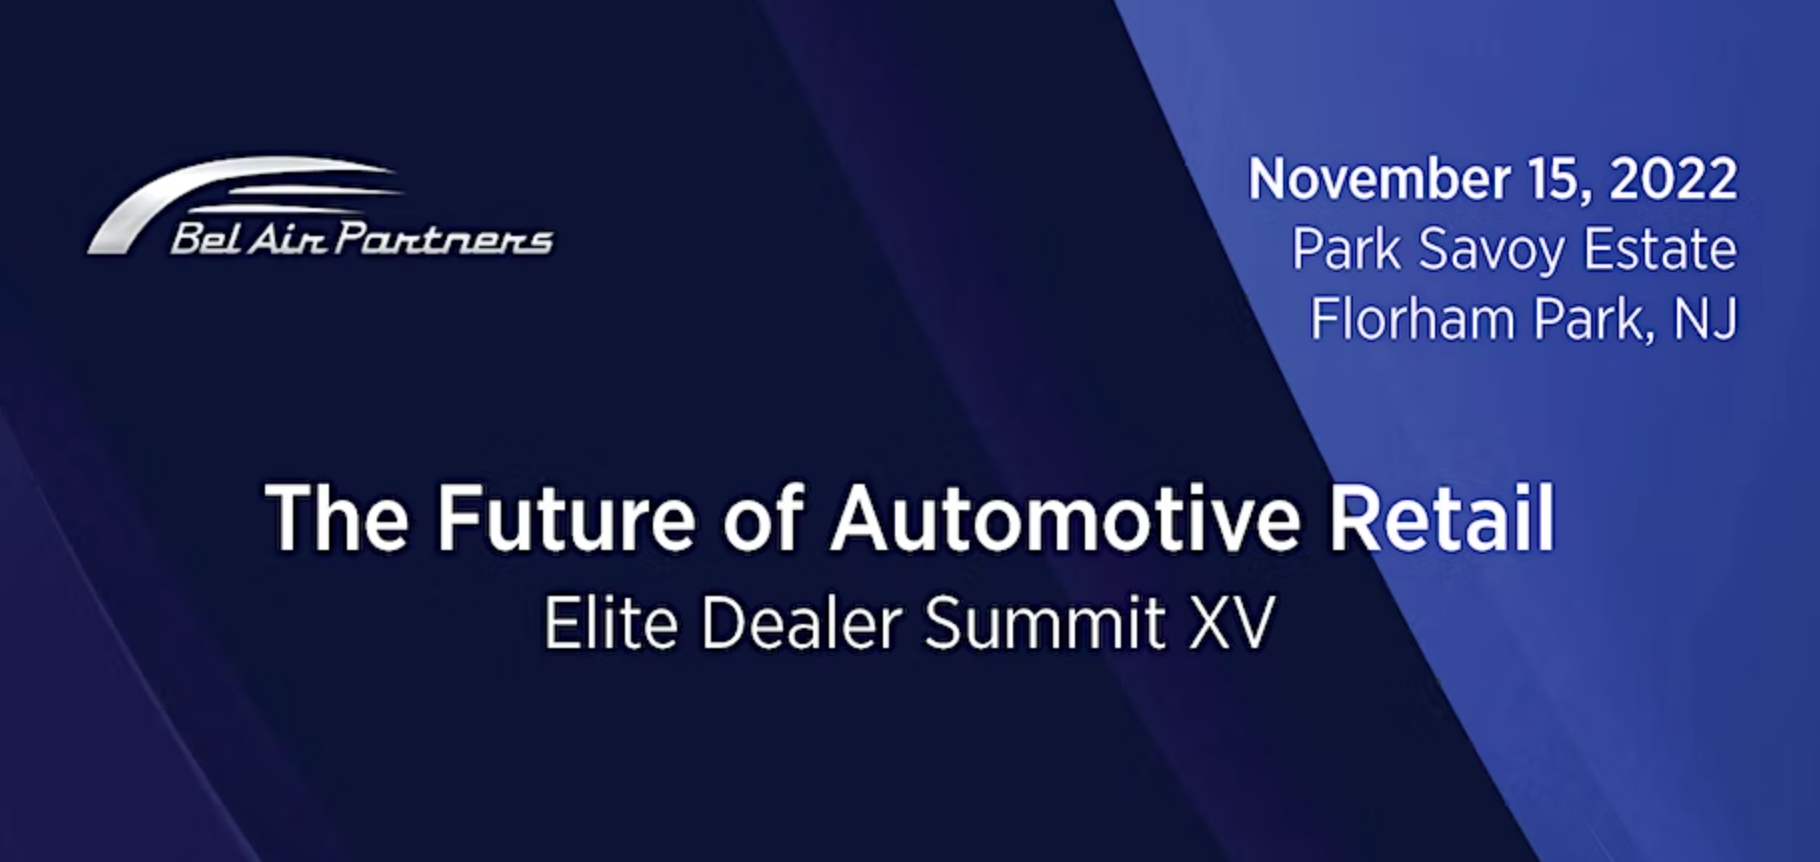 Bel Air Elite Dealer Summit XV